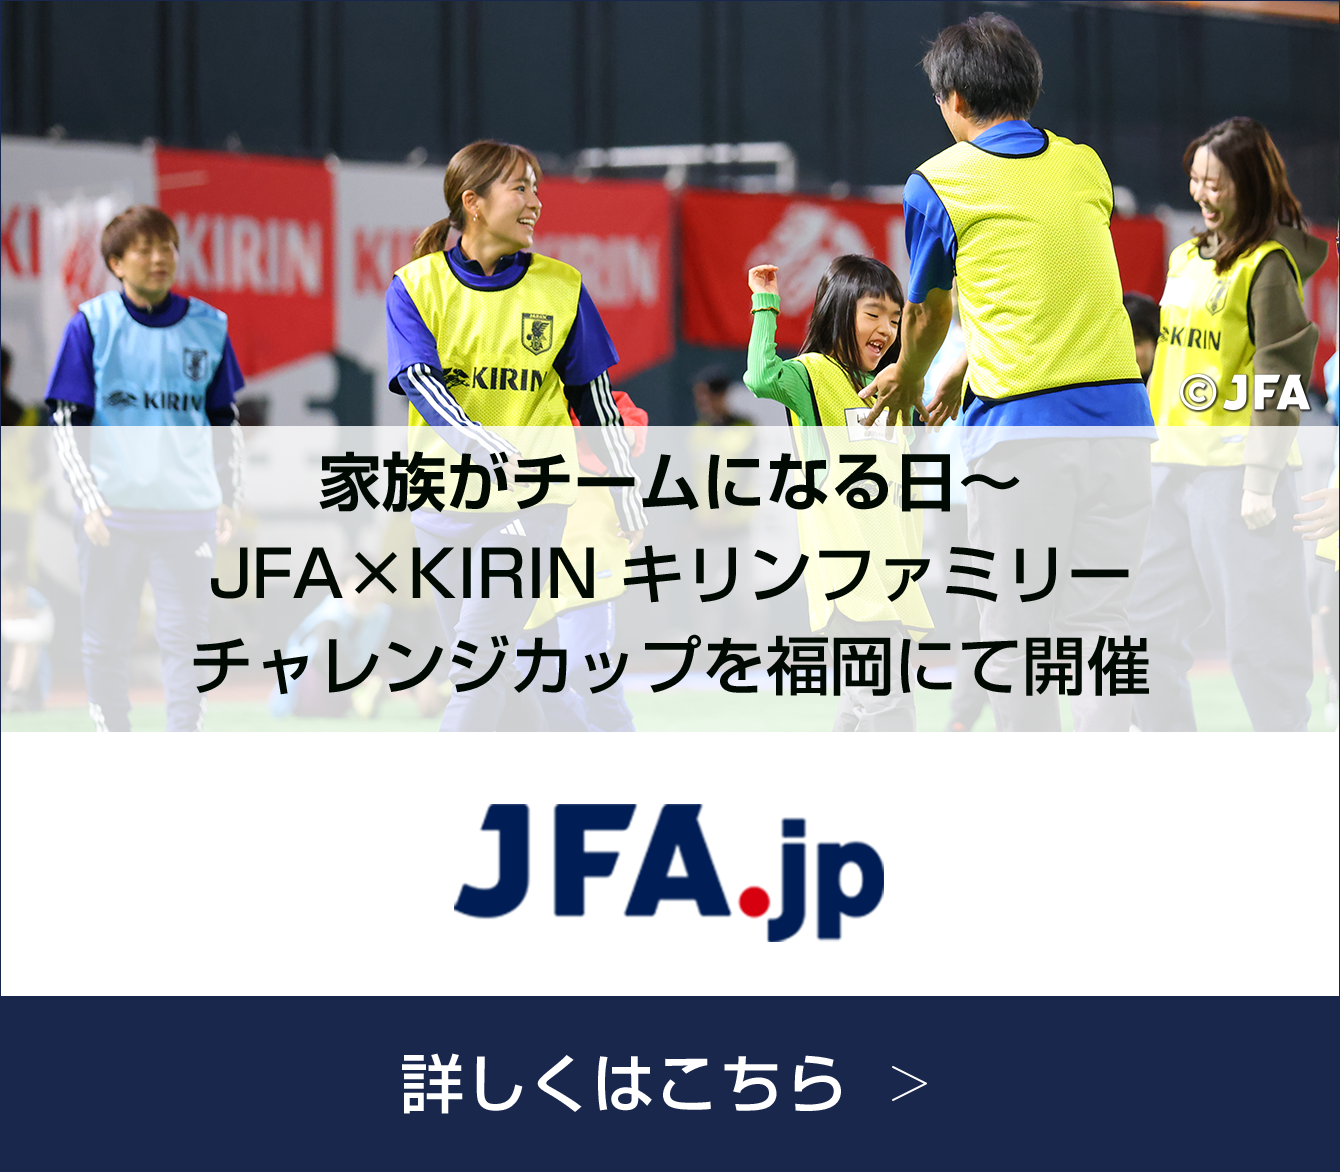 JFA.jp 家族がチームになる日～ JFA×KIRIN キリンファミリーチャレンジカップを福岡にて開催 詳しくはこちら